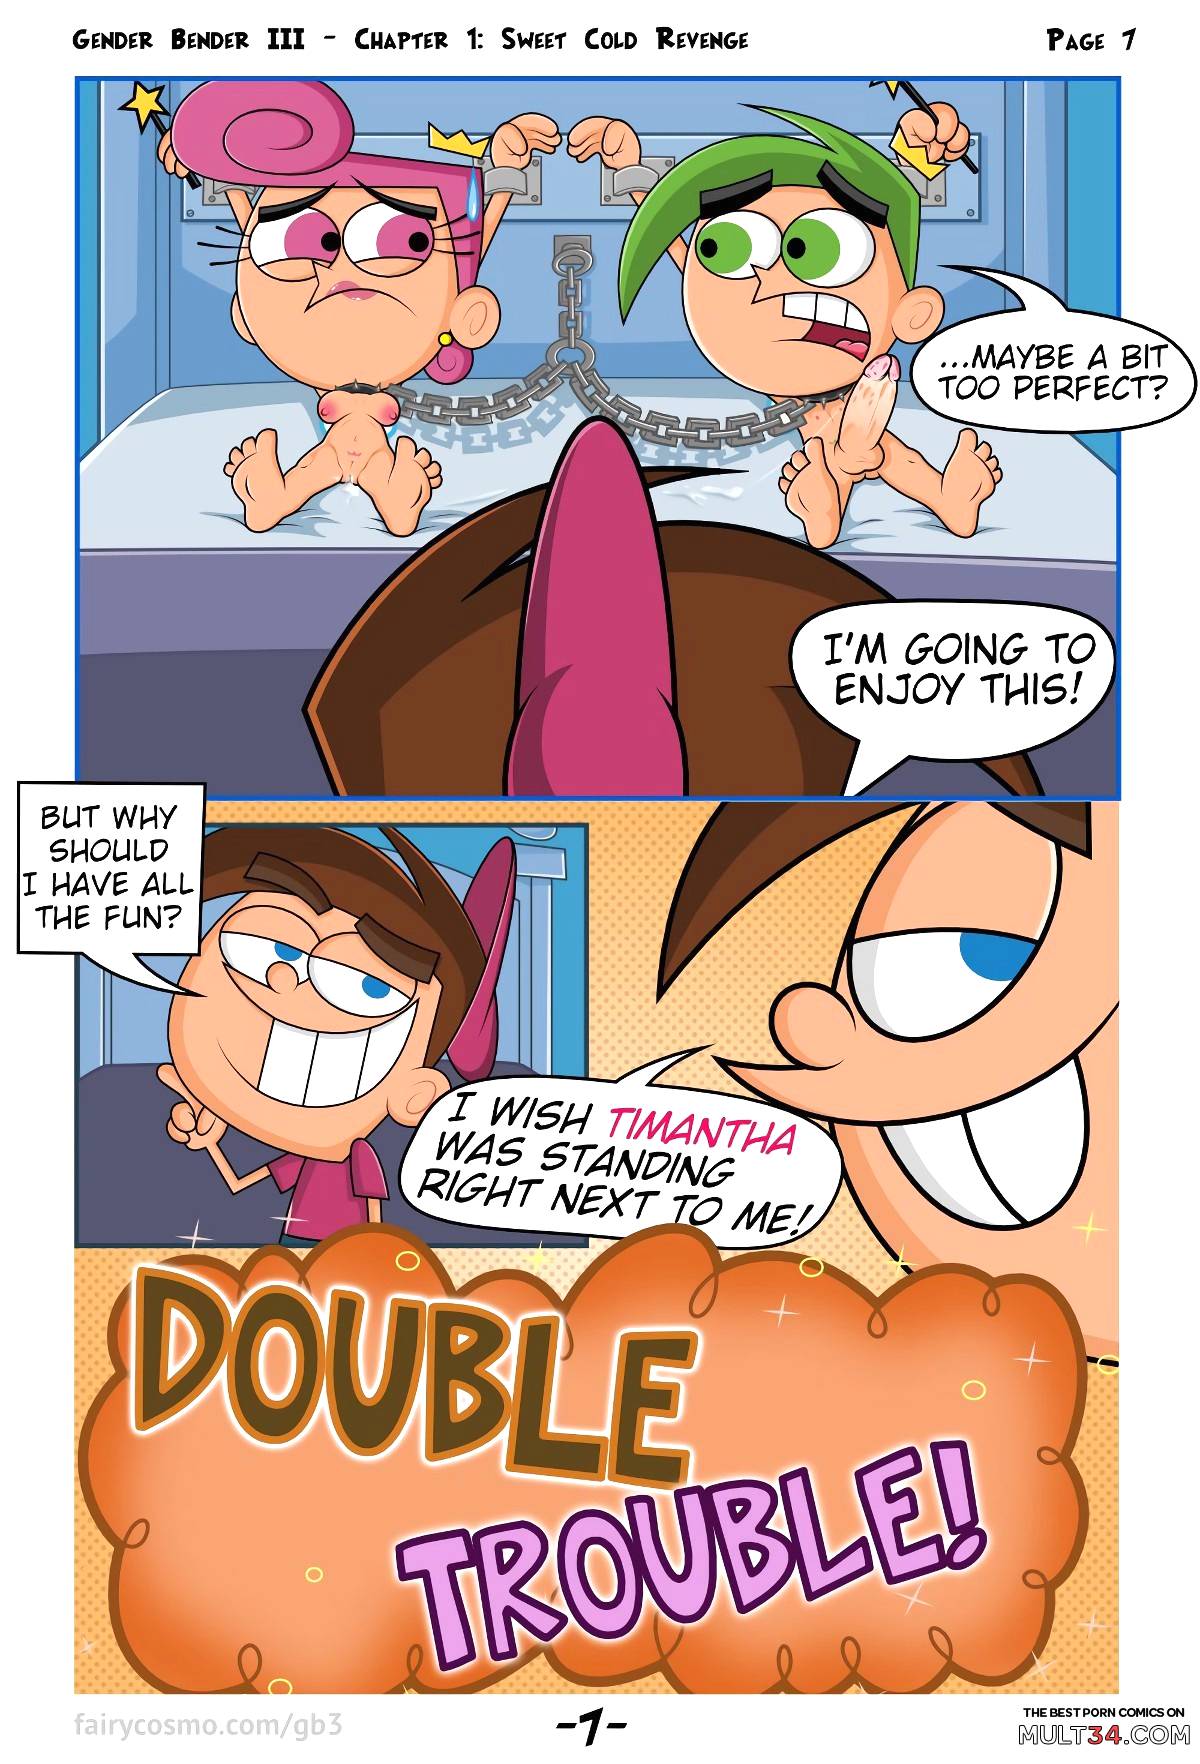 Cartoon Gender Swap Porn - Gender Bender III porn comic - the best cartoon porn comics, Rule 34 |  MULT34